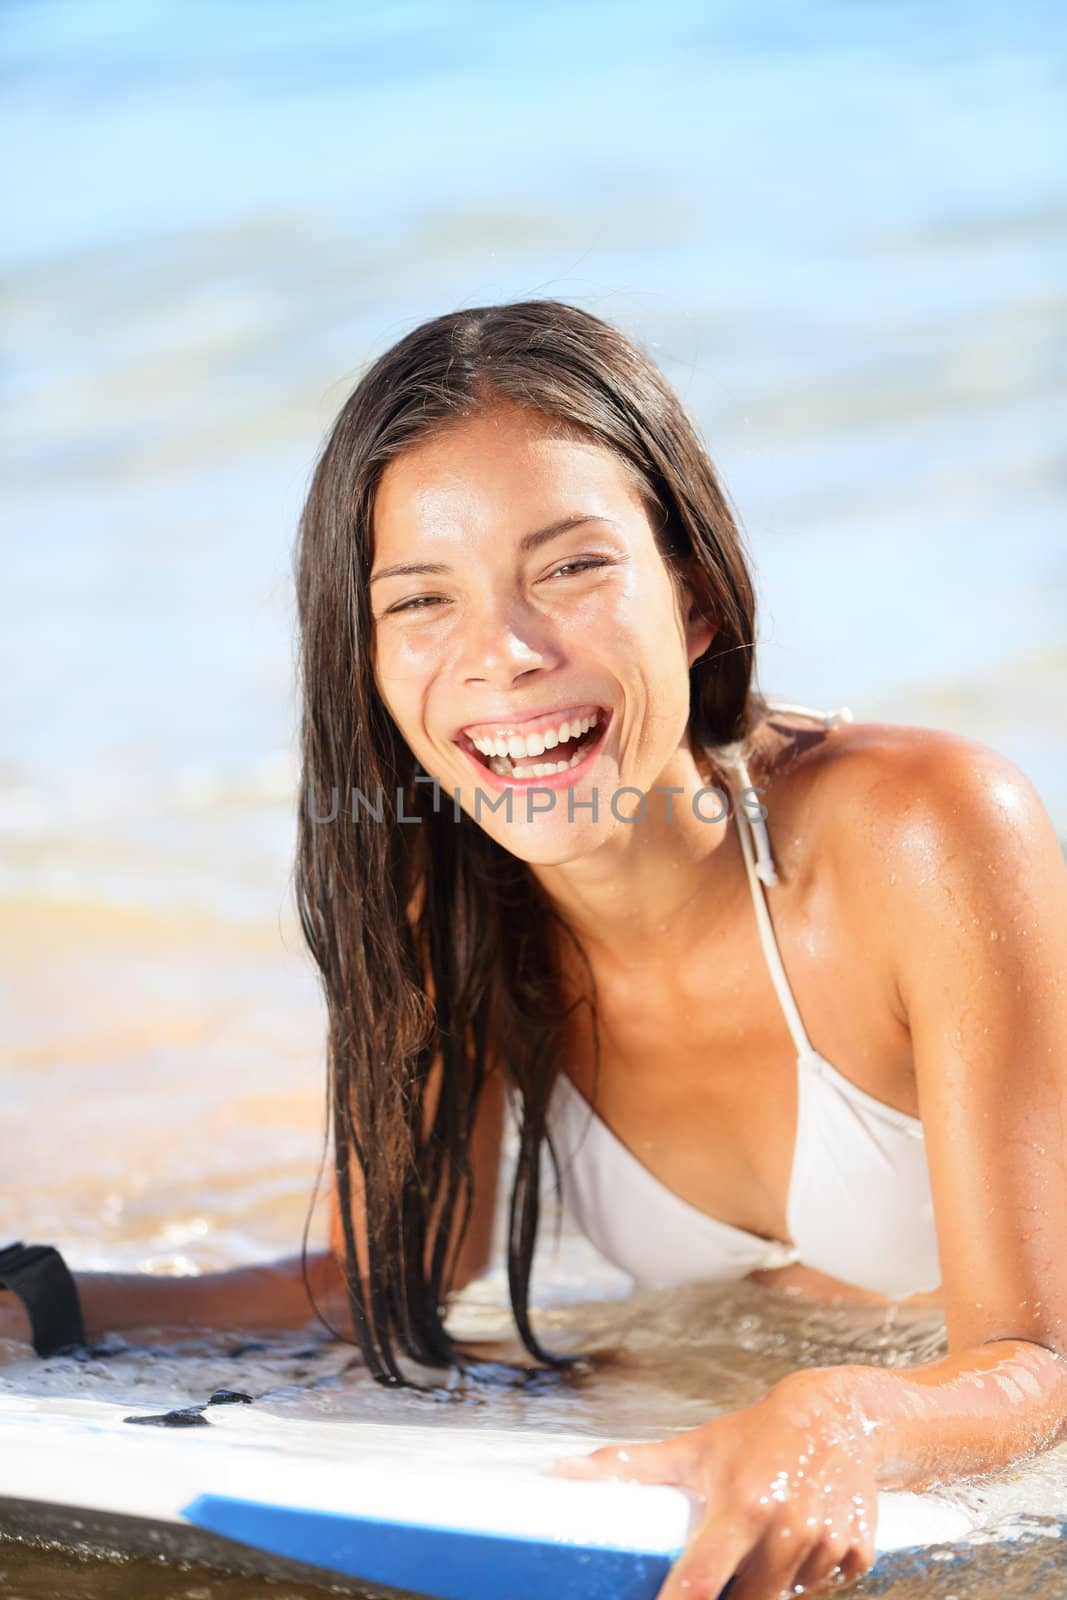 Water sport fun - beach woman bodyboarding surfing by Maridav